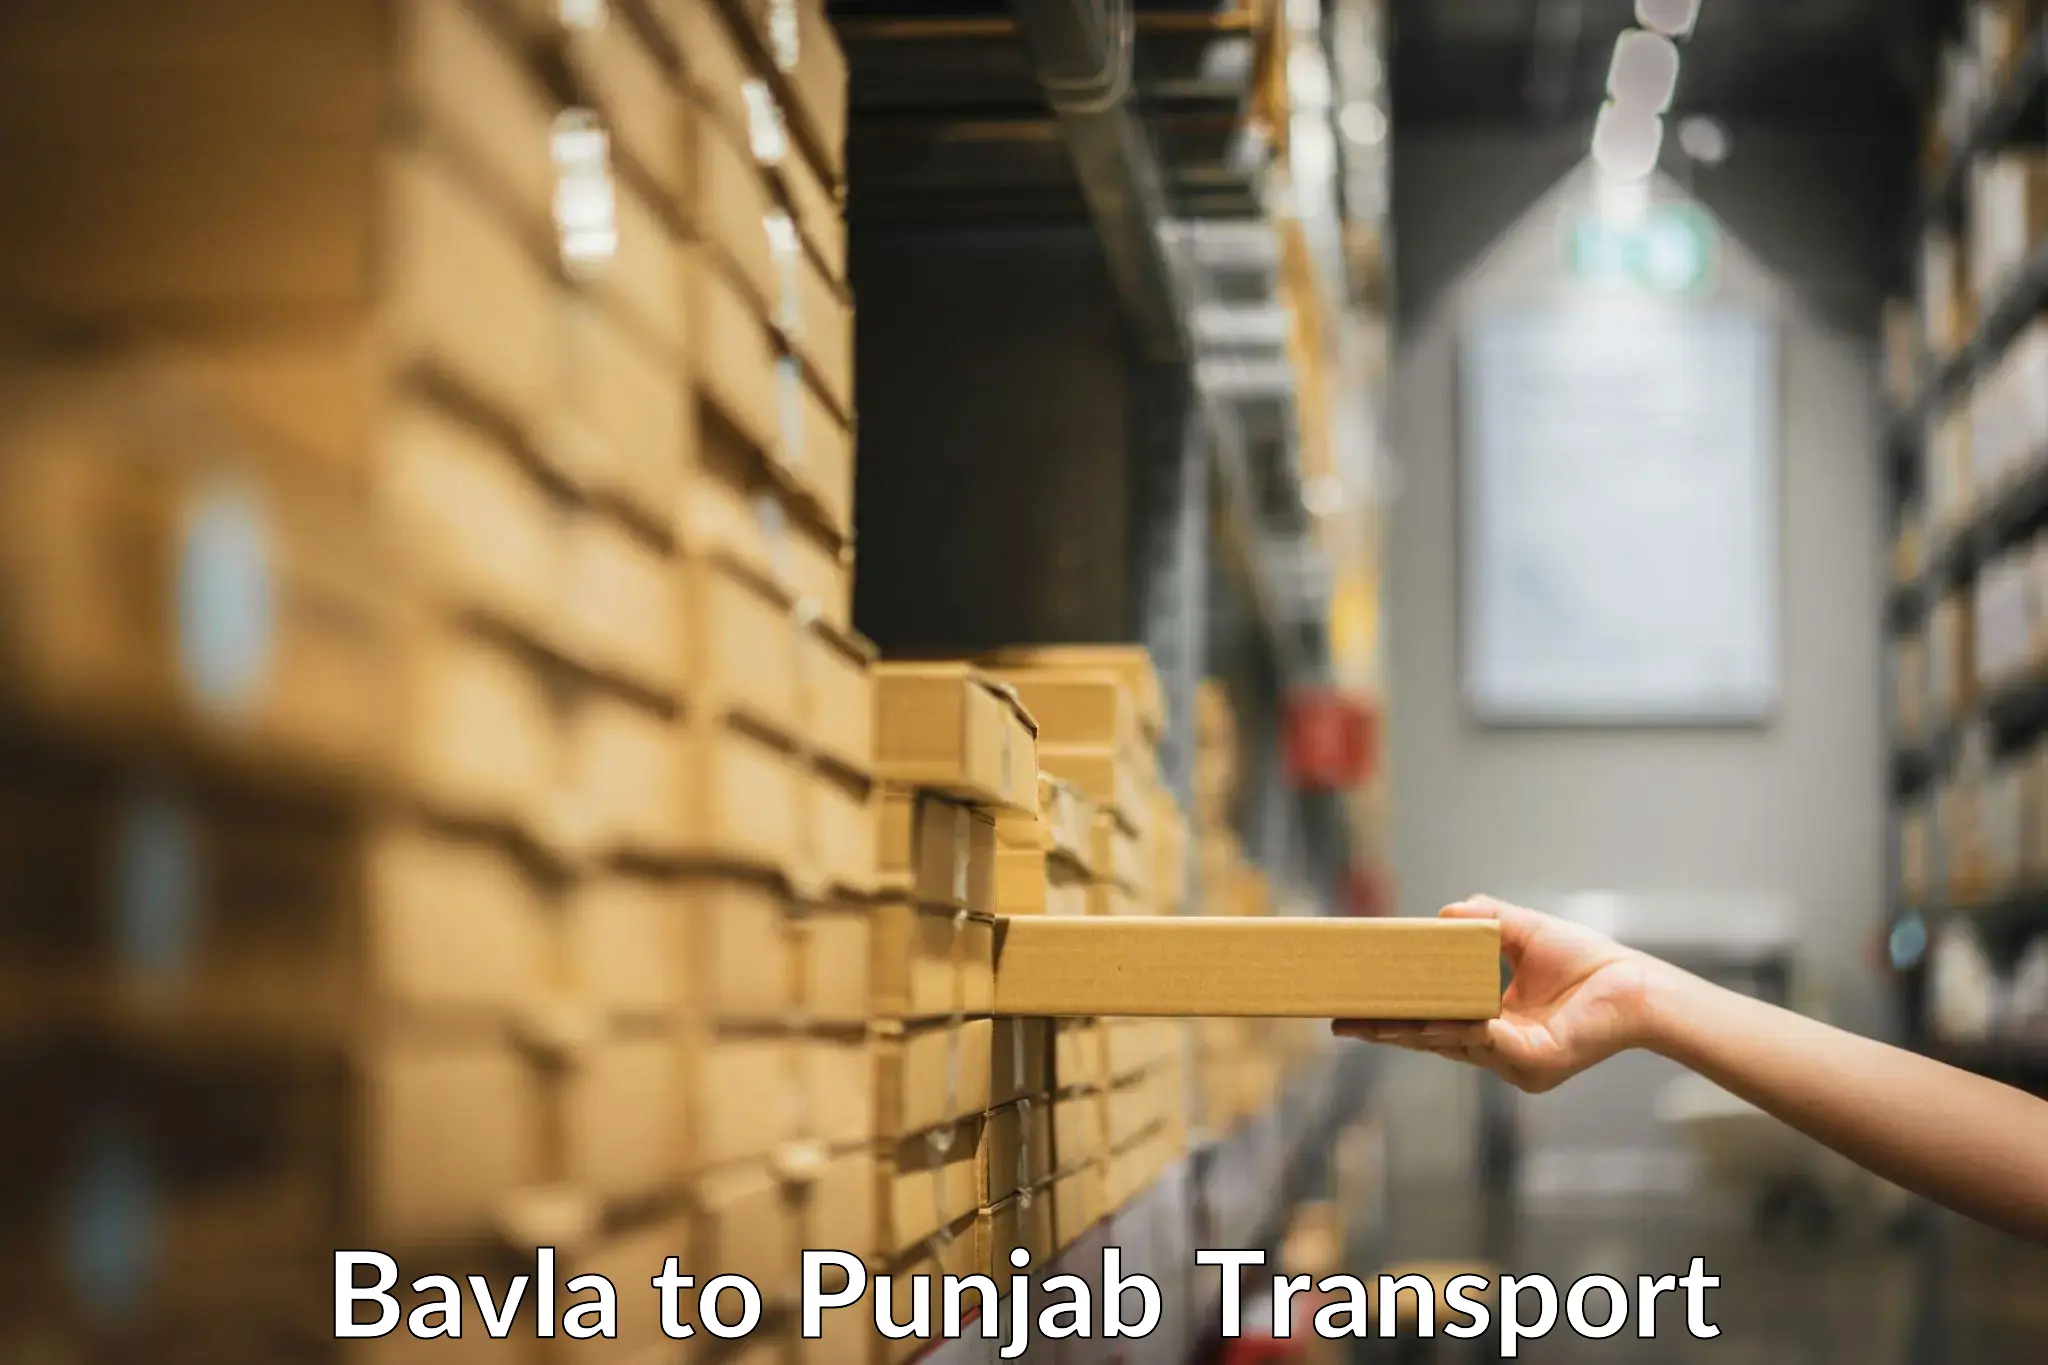 Truck transport companies in India Bavla to Punjab